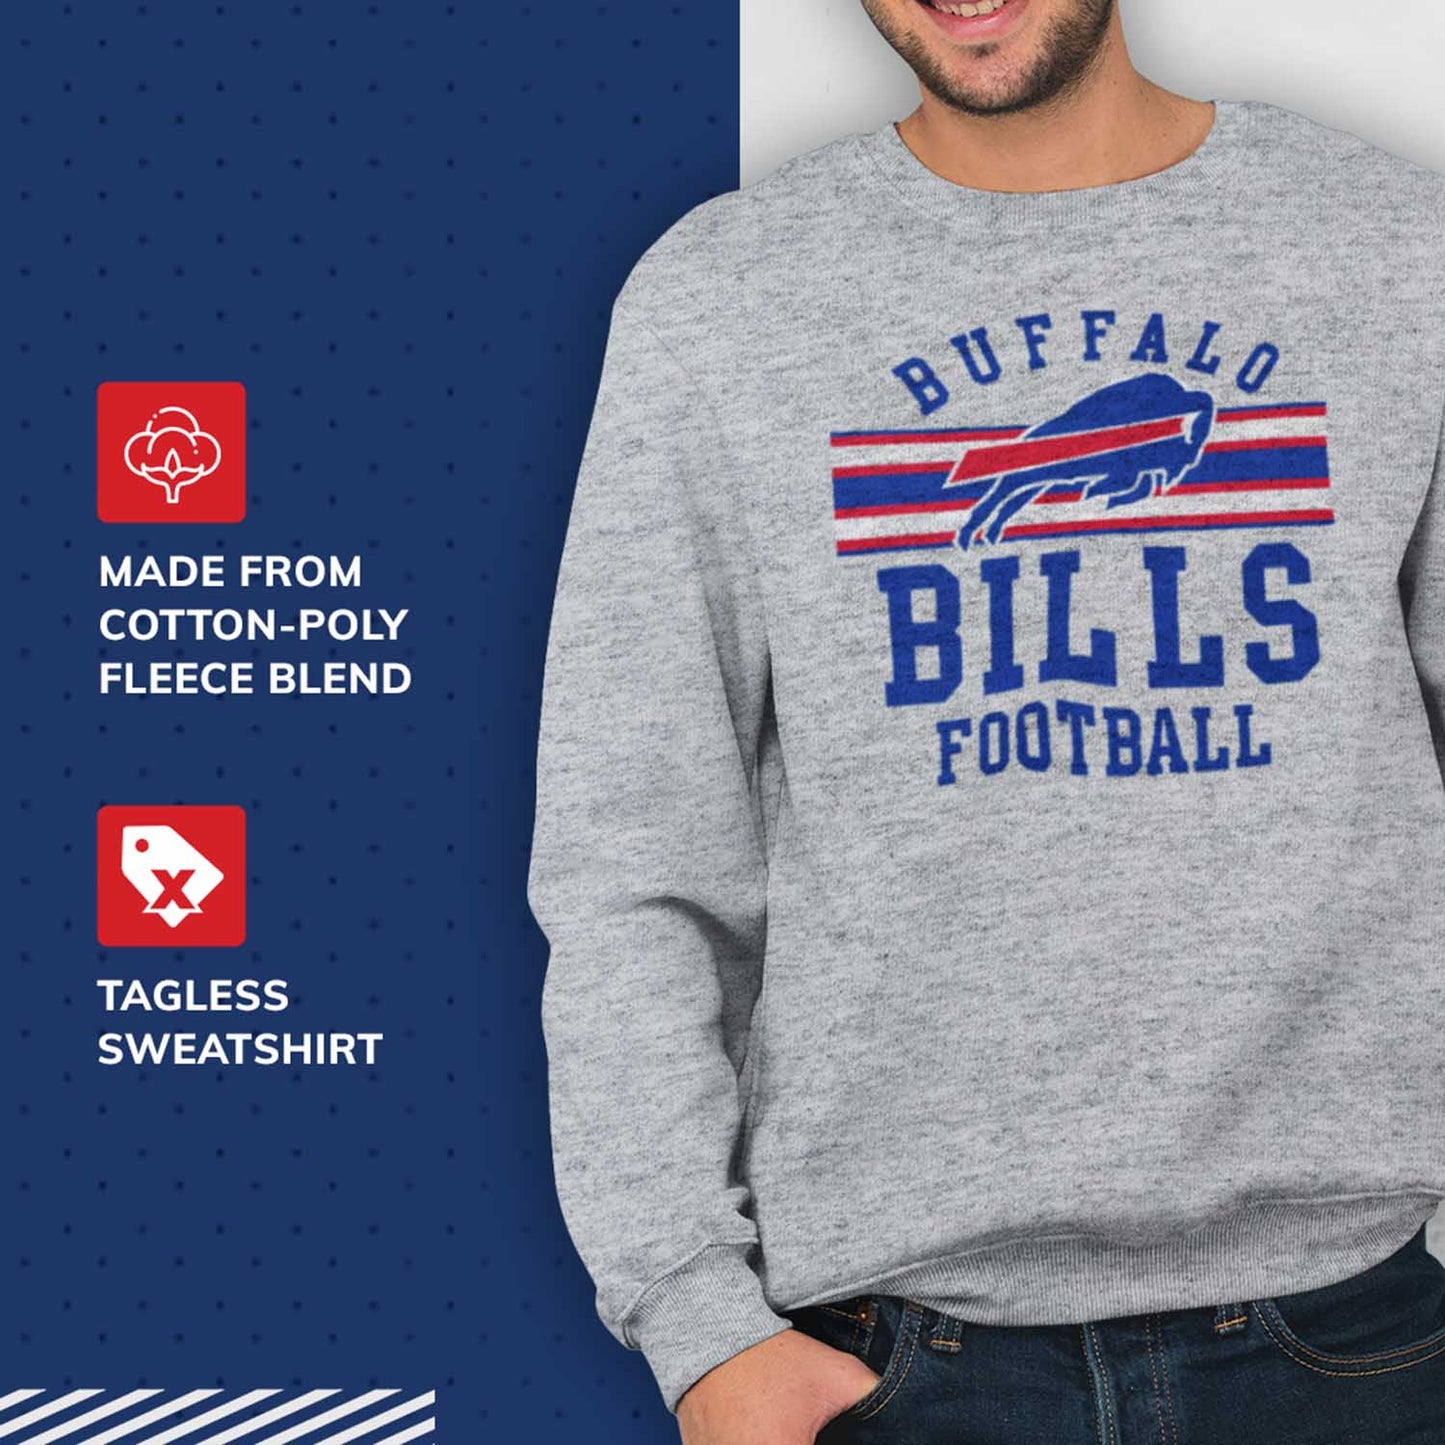 Buffalo Bills NFL Team Stripe Crew Sweatshirt - Sport Gray